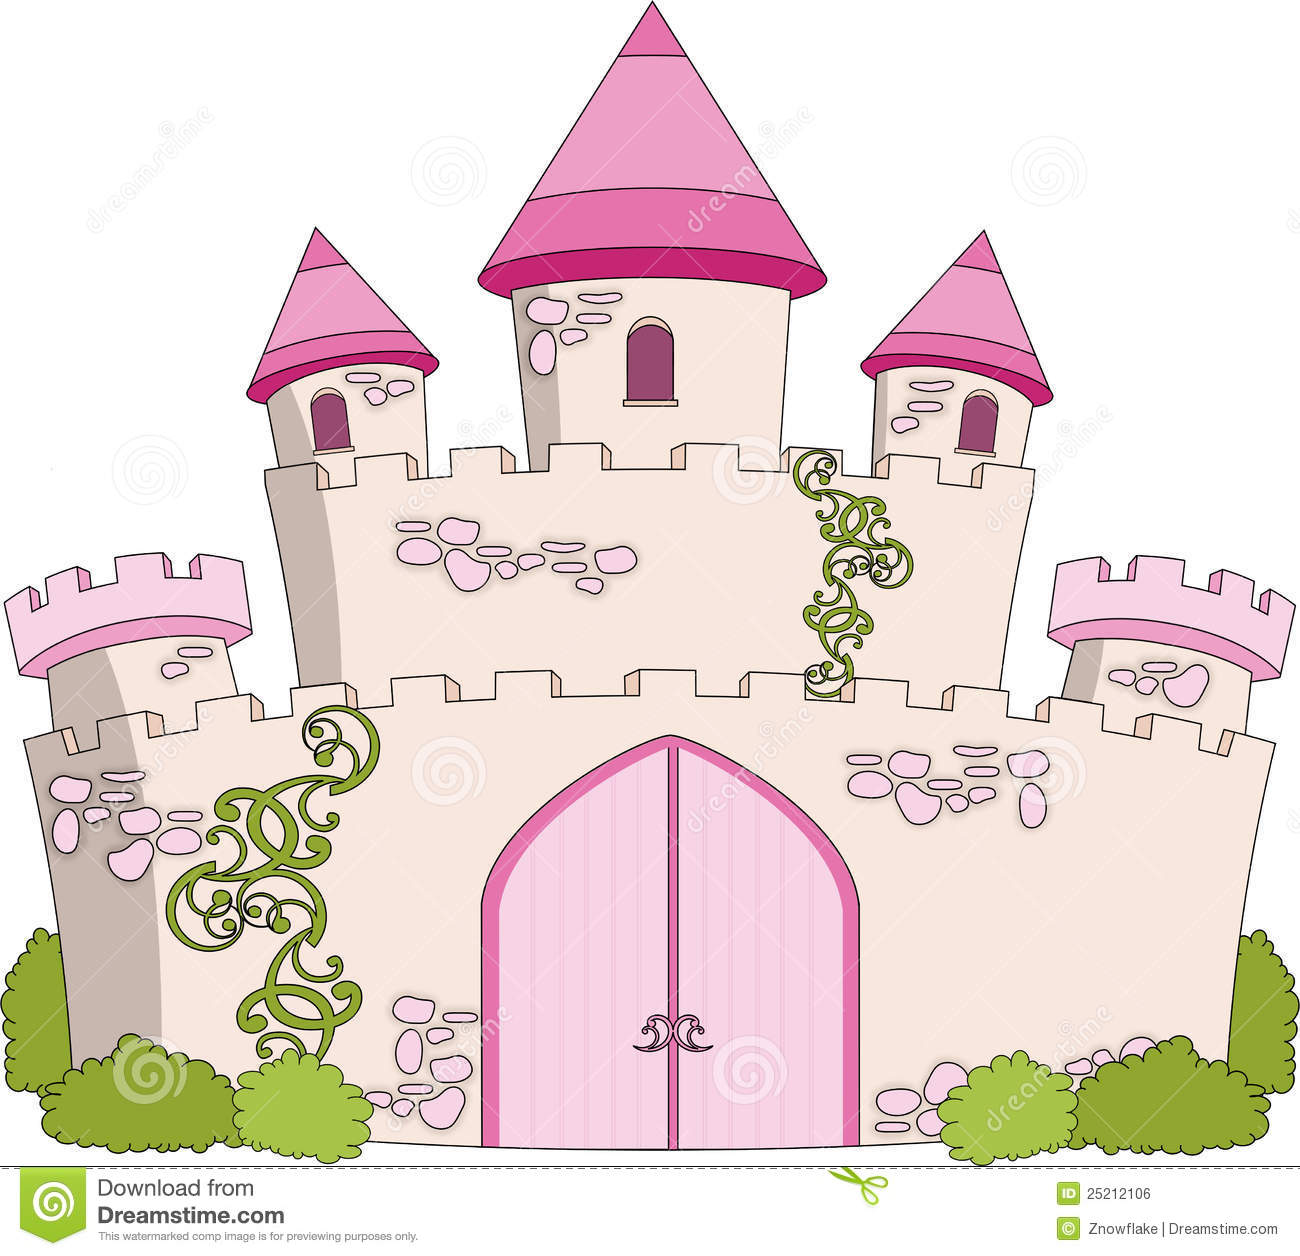 Magic Fairytale Castle Royalty Free Stock Image   Image  25212106